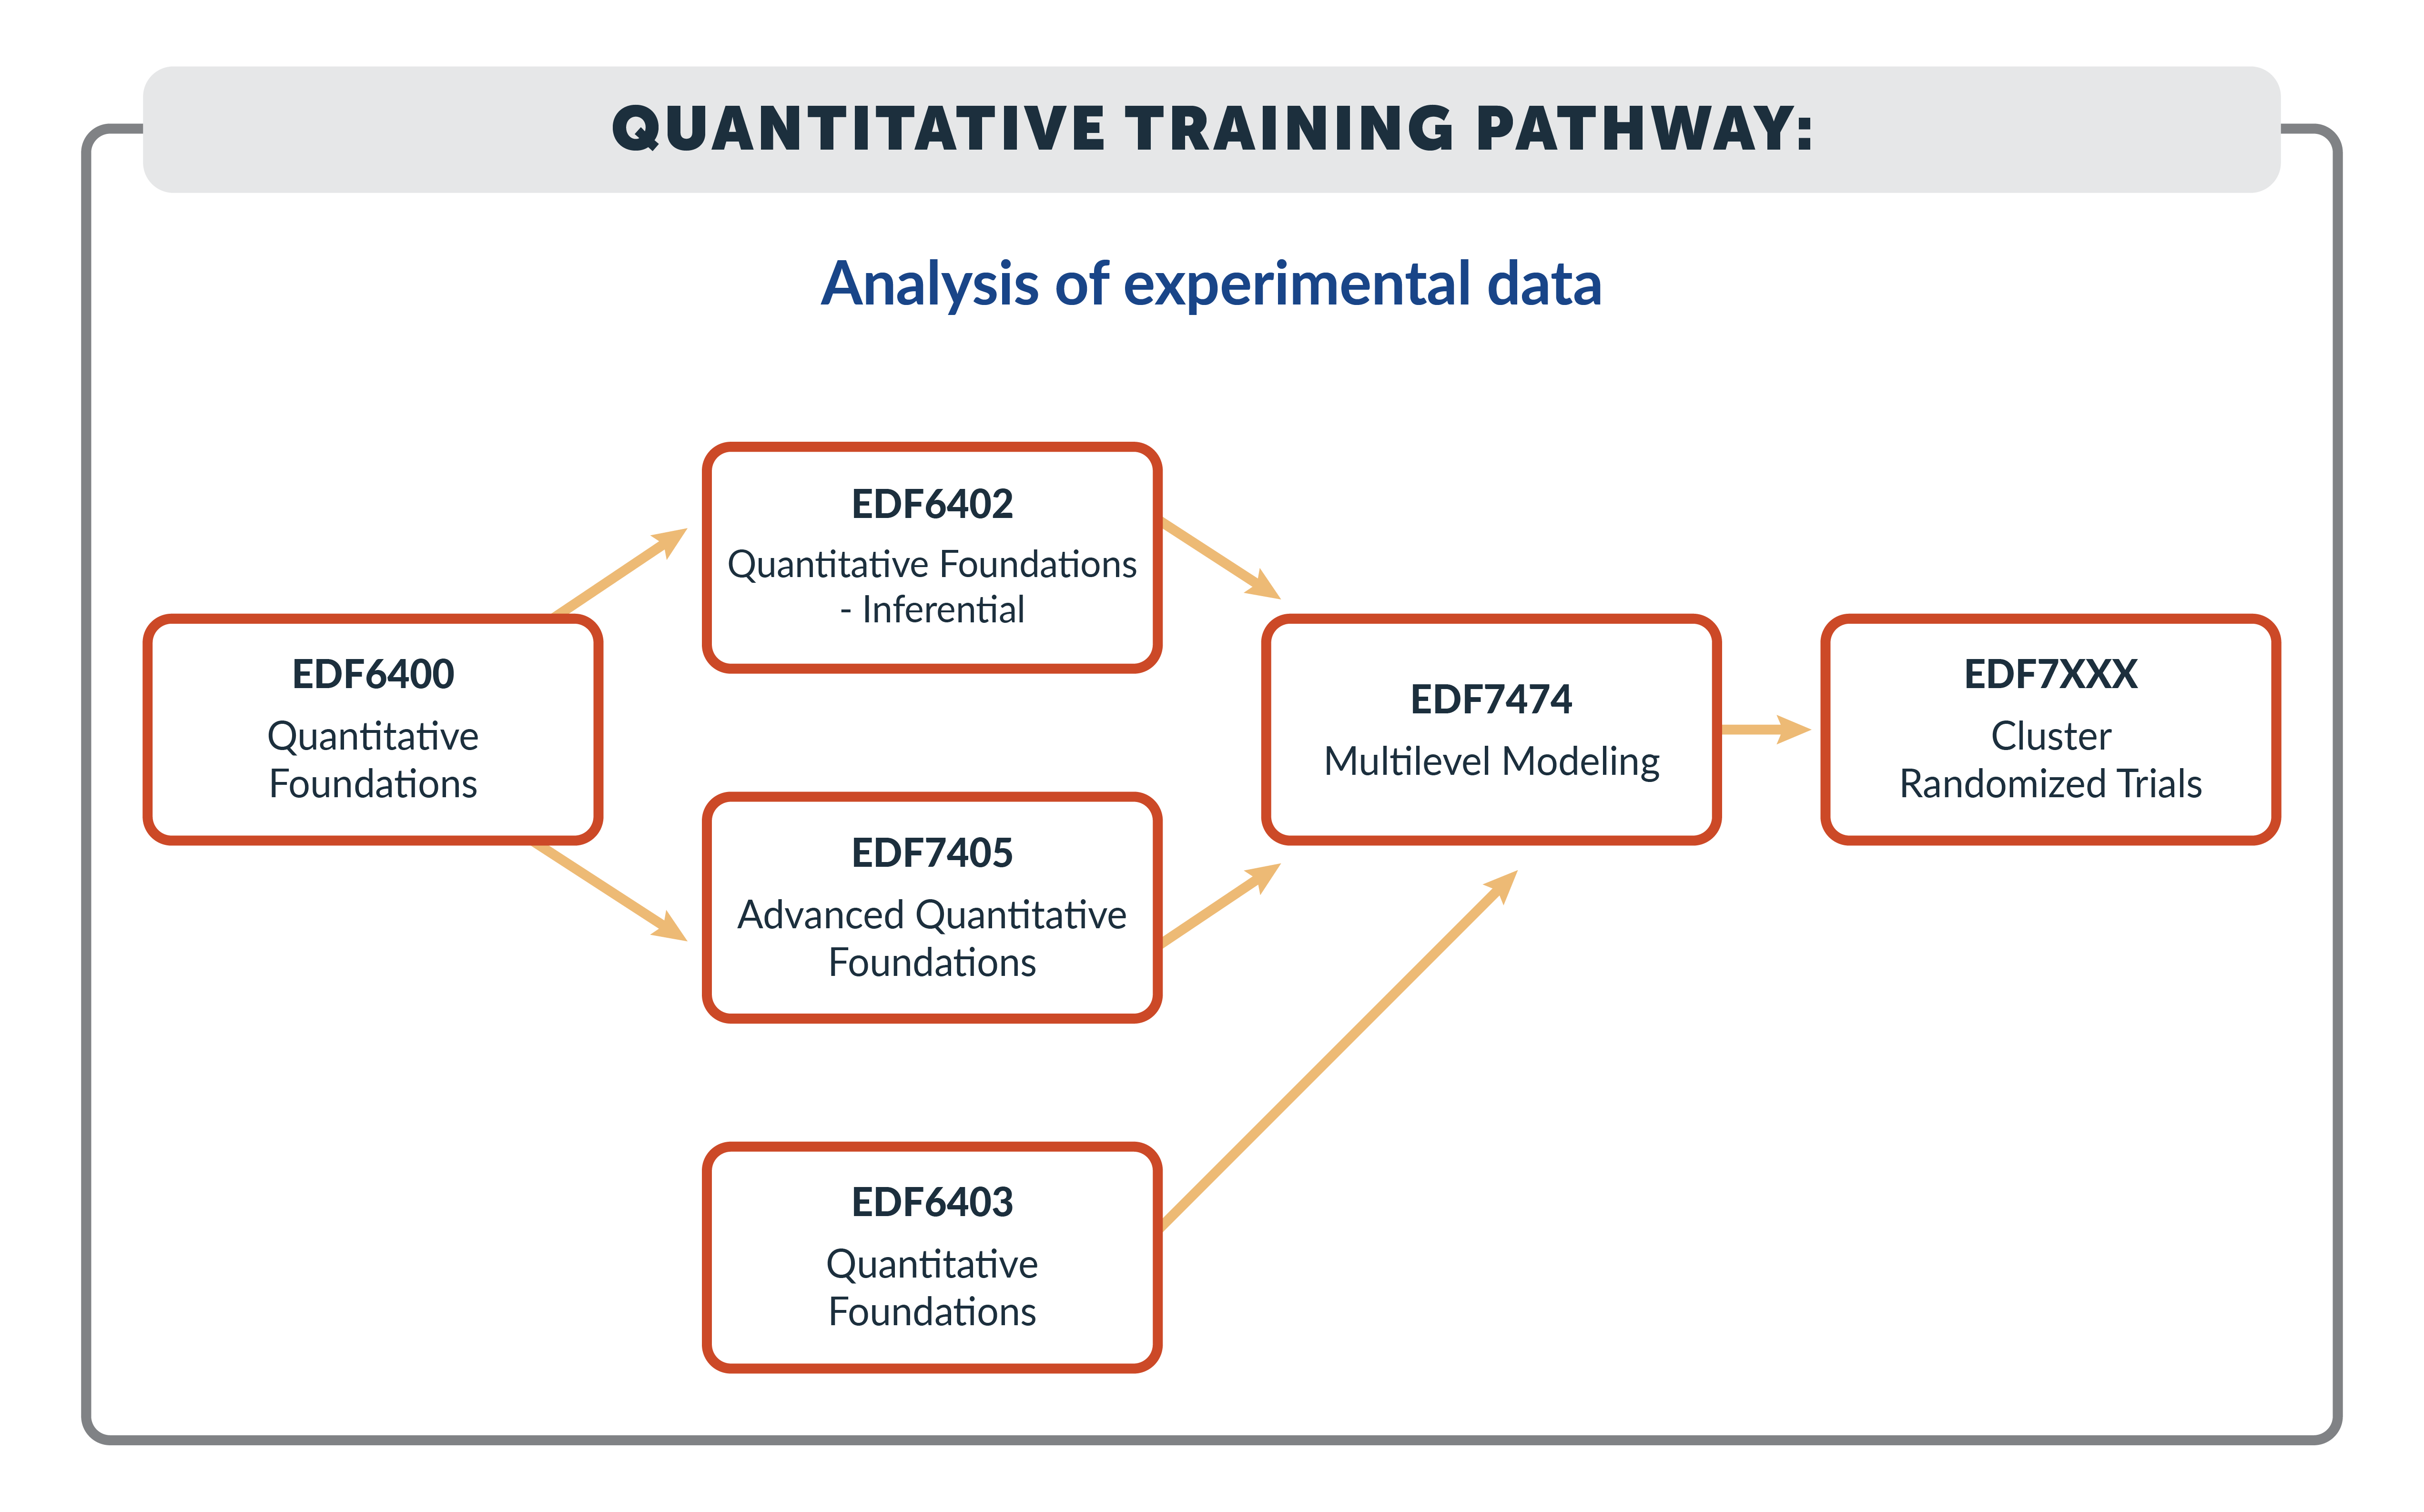 Quantitative Training Pathway - Analysis of Experimental Data